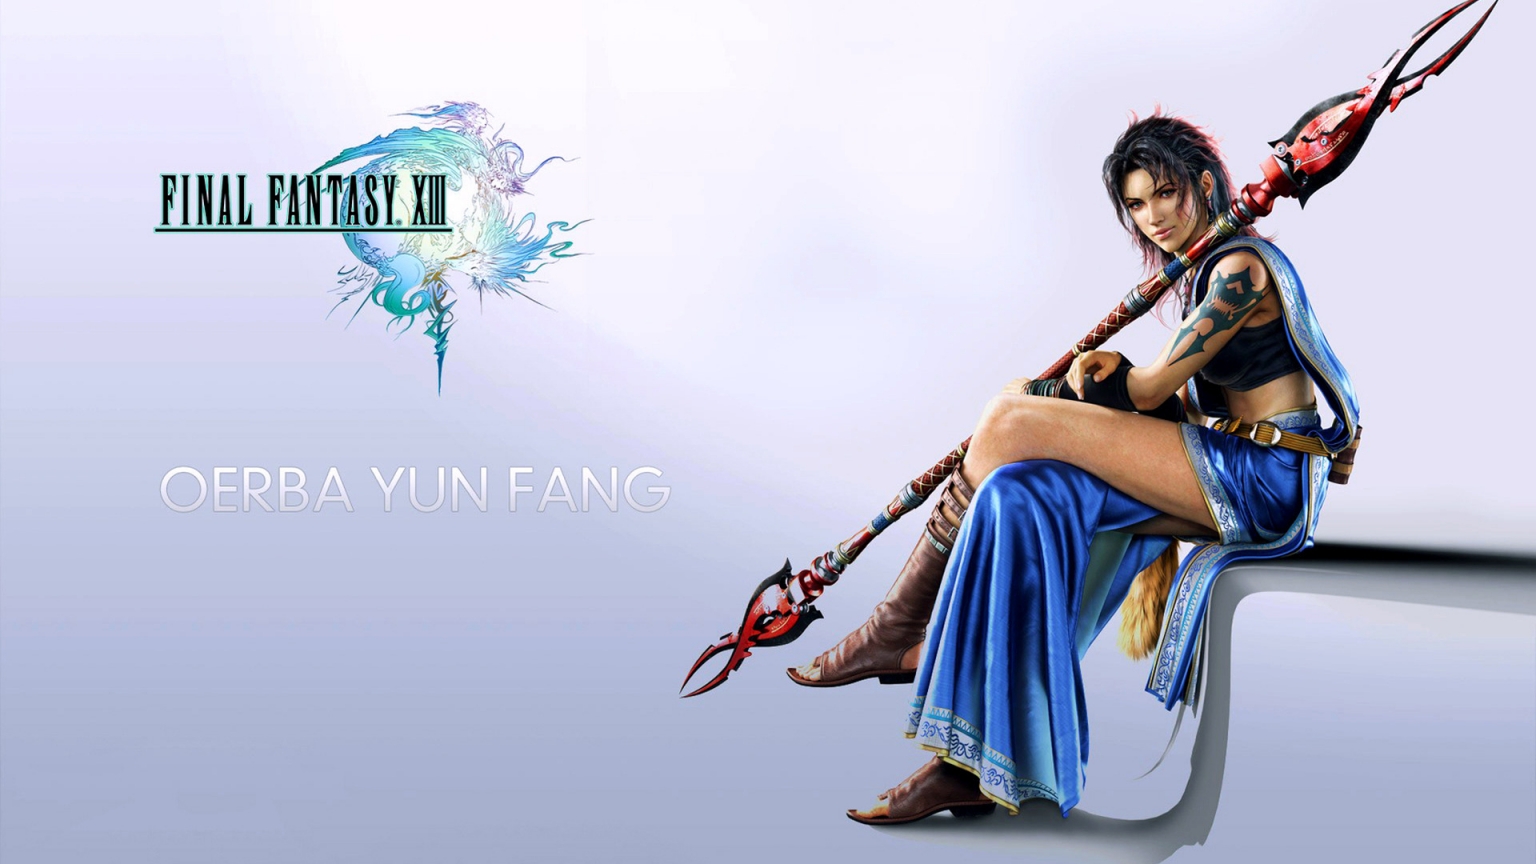 Final Fantasy XIII Oerba Yun Fang for 1536 x 864 HDTV resolution